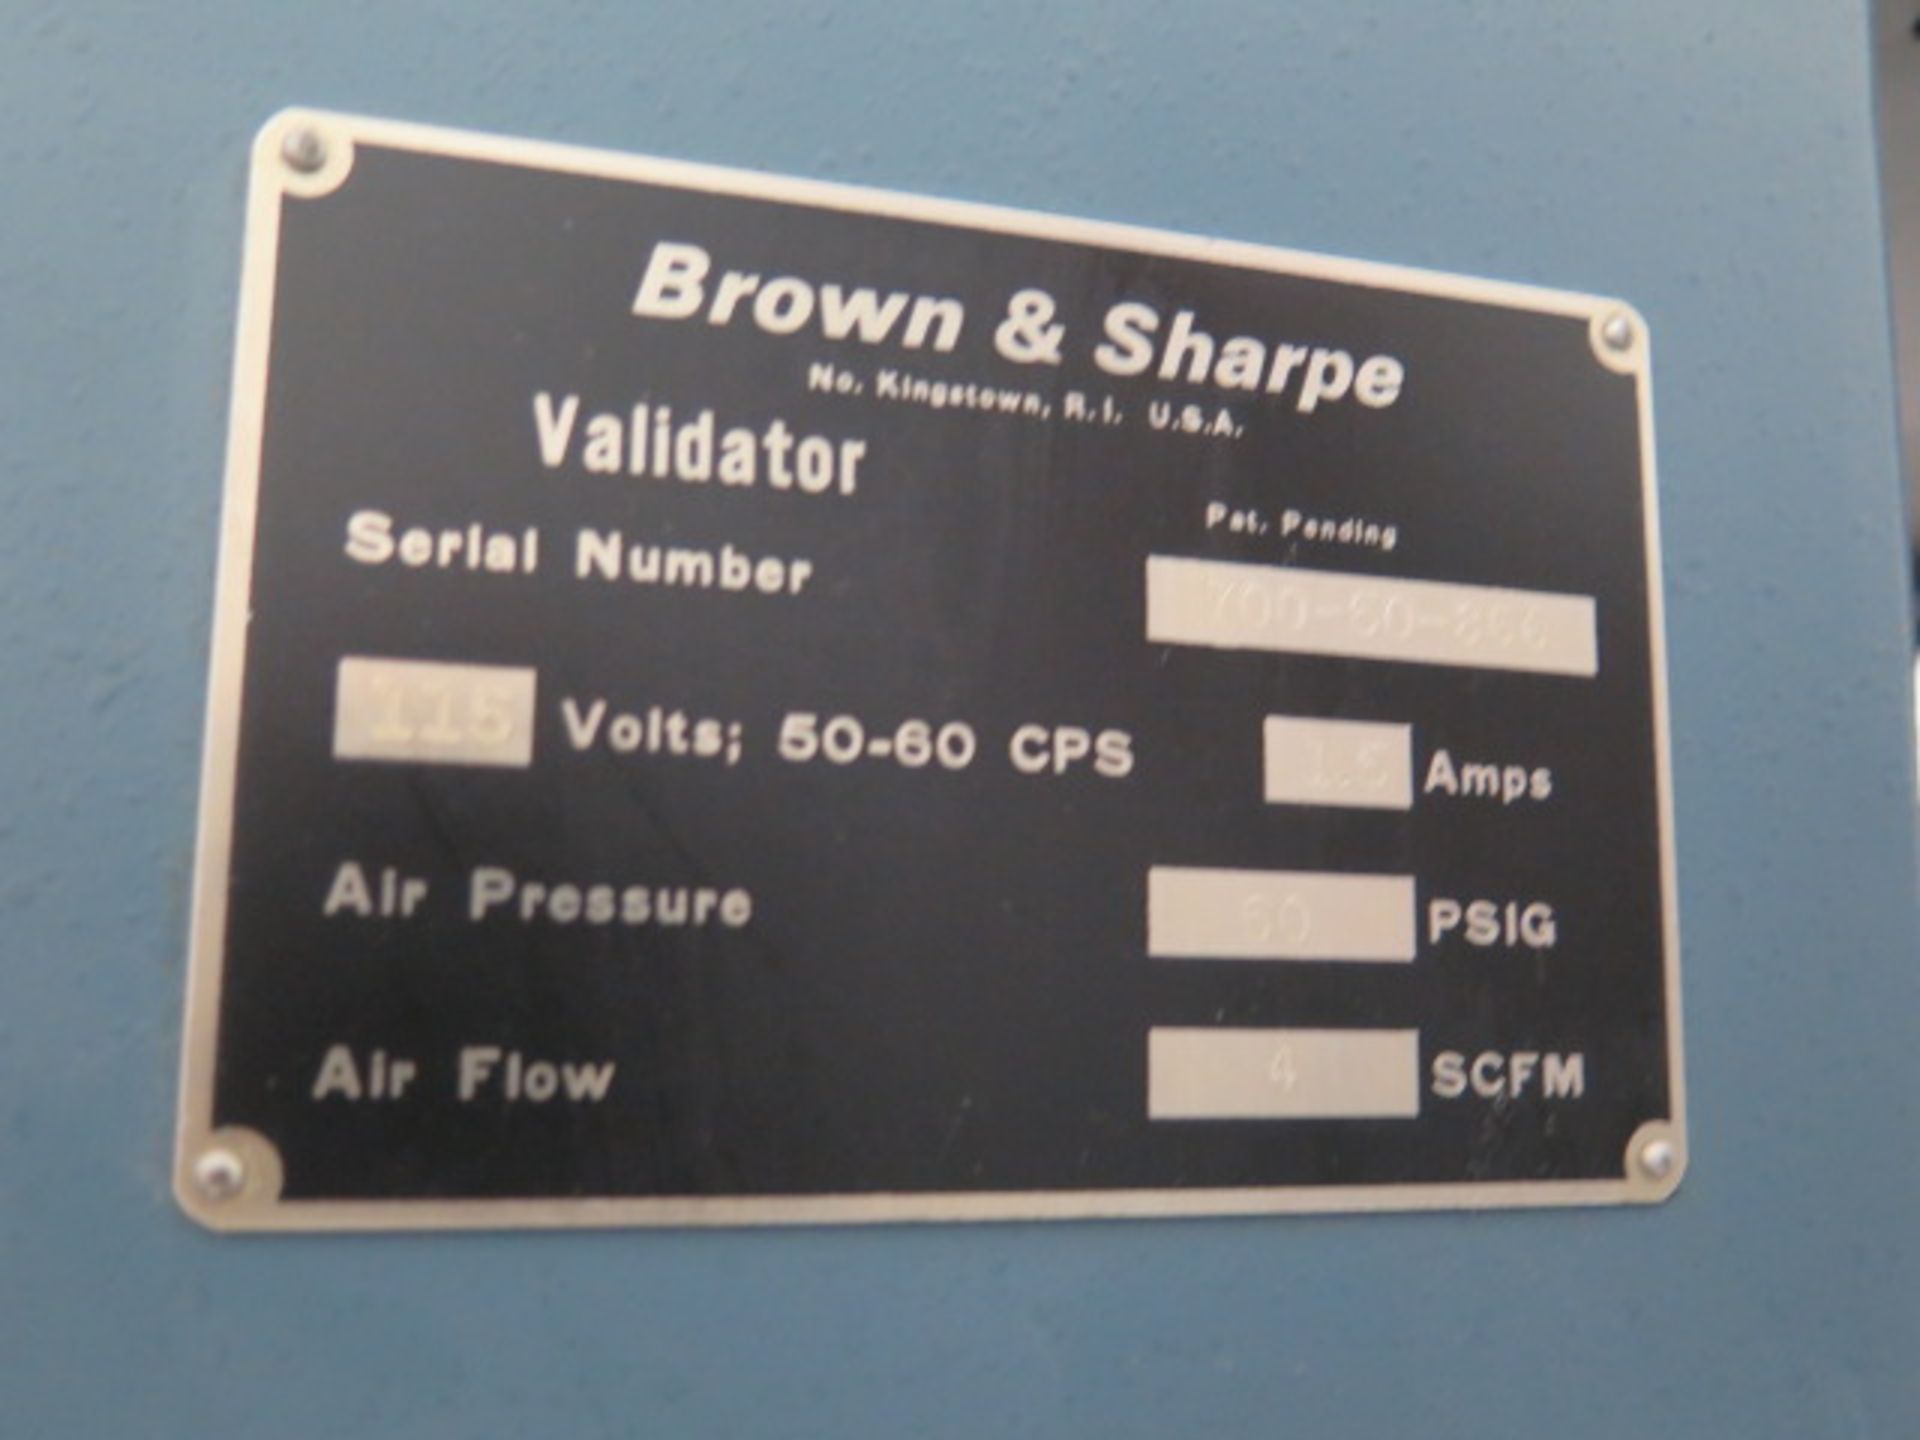 Brown & Sharpe “Validator 50” CMM Machine s/n 700-50-966 w/ Renishaw MIP Probe Head, SOLD AS IS - Image 11 of 11